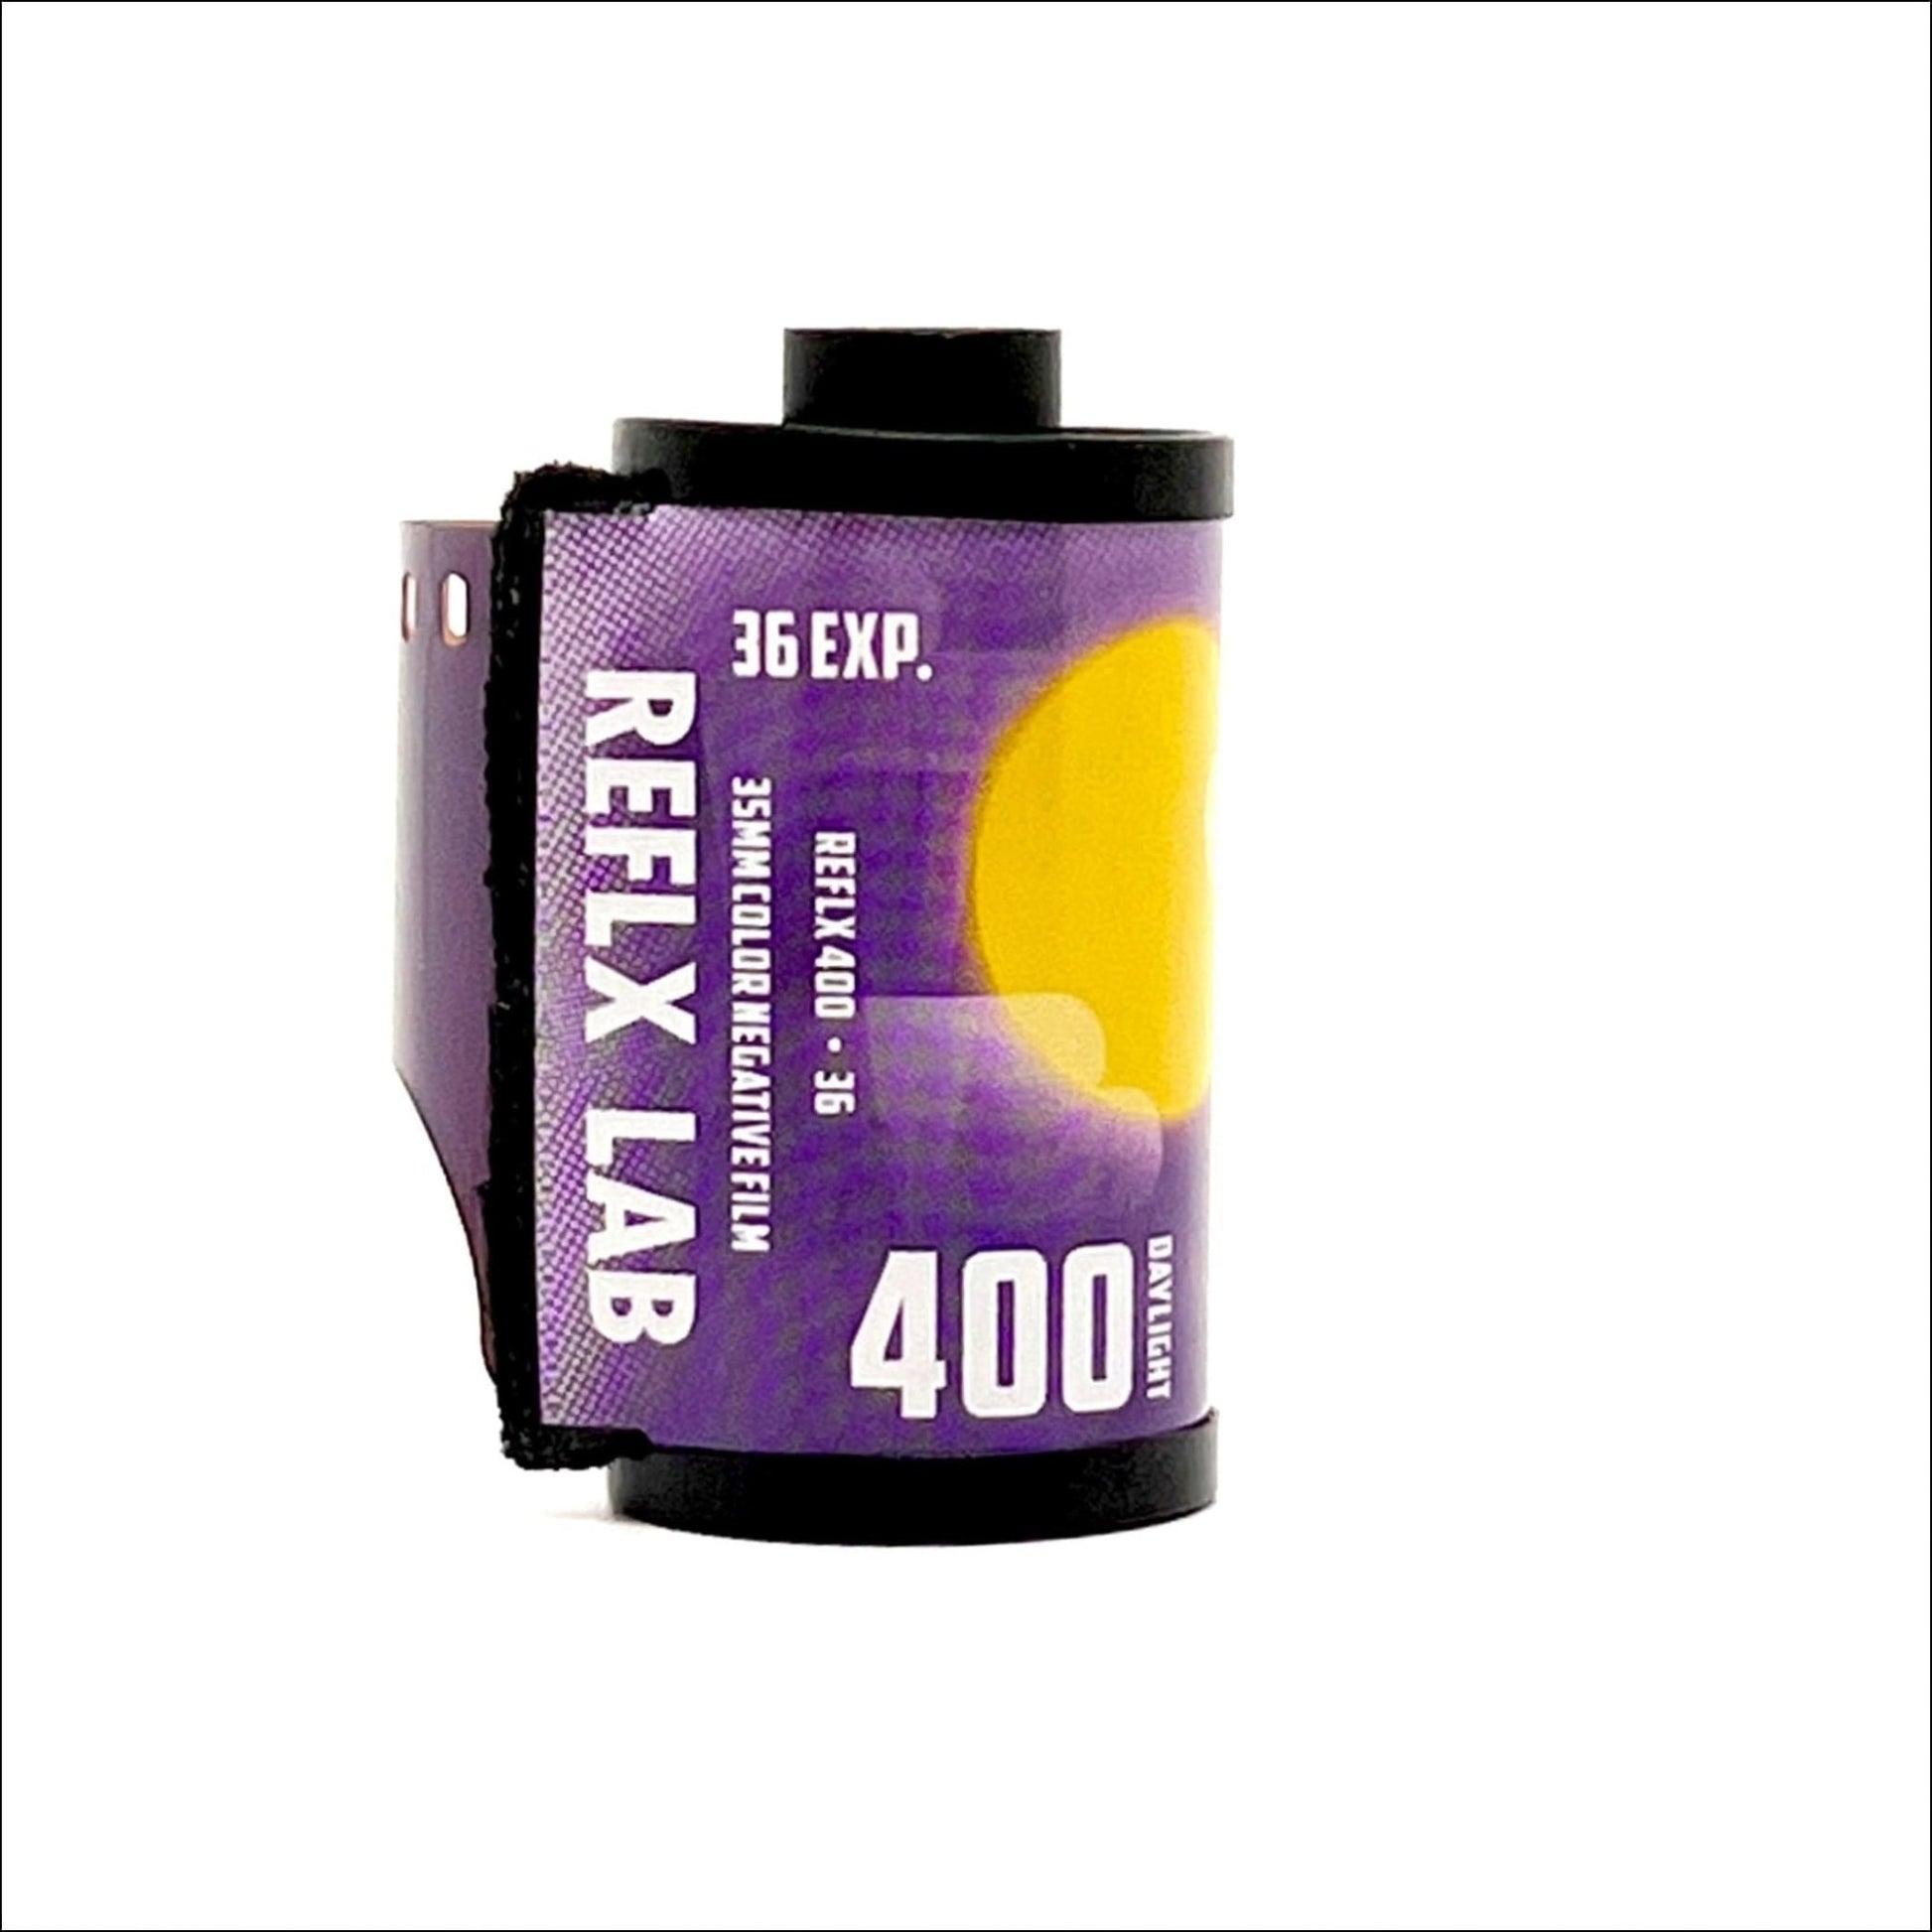 Reflx Lab 400 Daylight Color C41 35mm 36 Exp Film